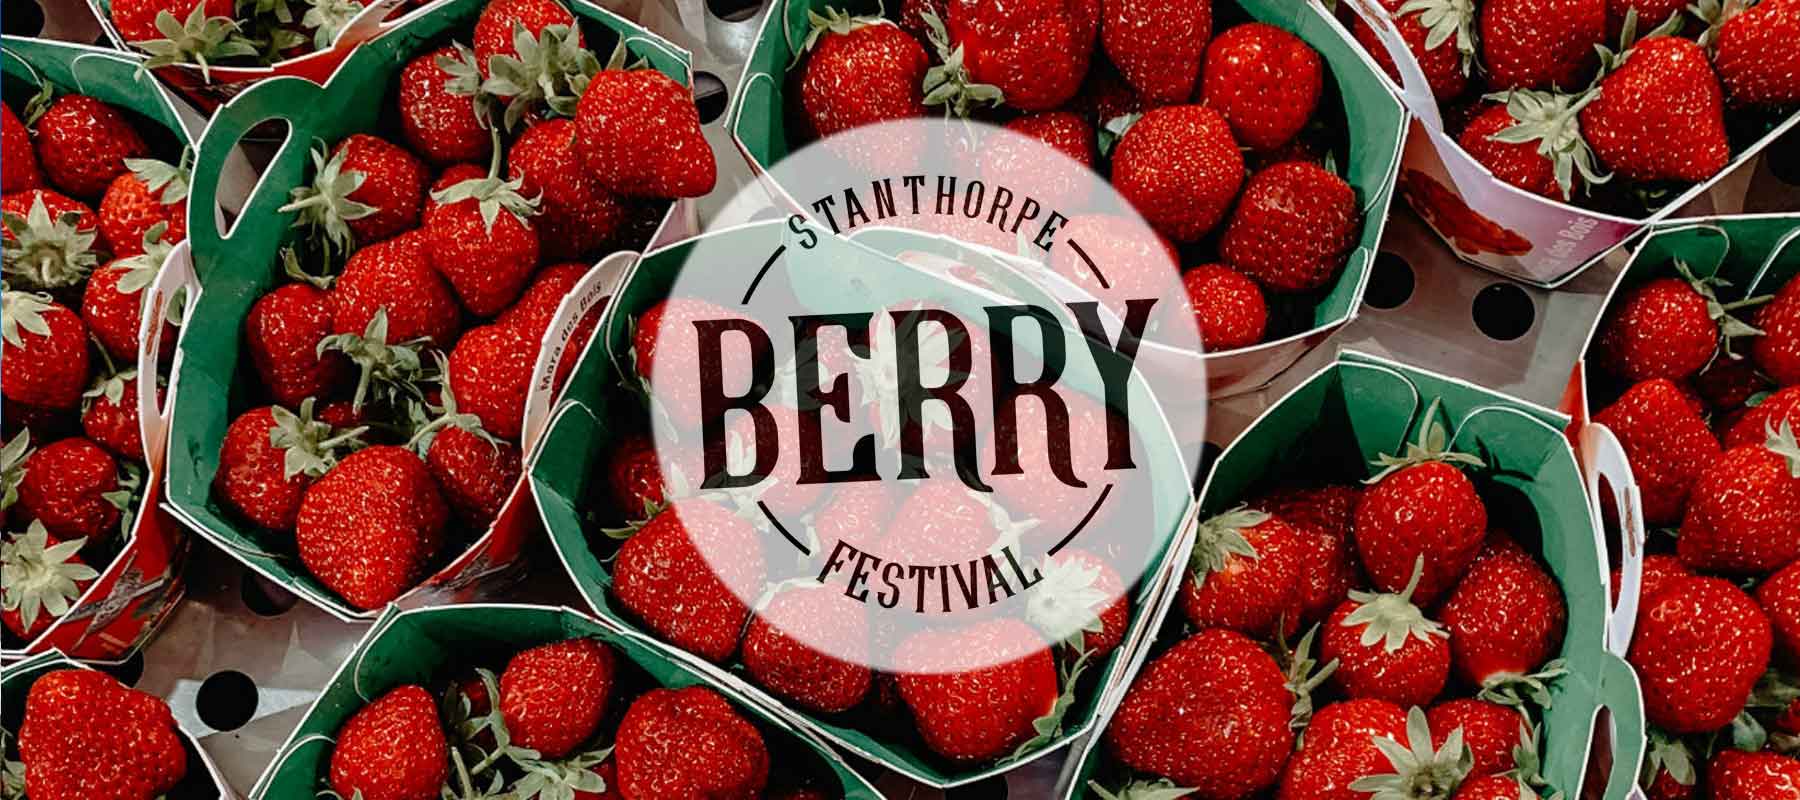 Stanthorpe Berry Festival